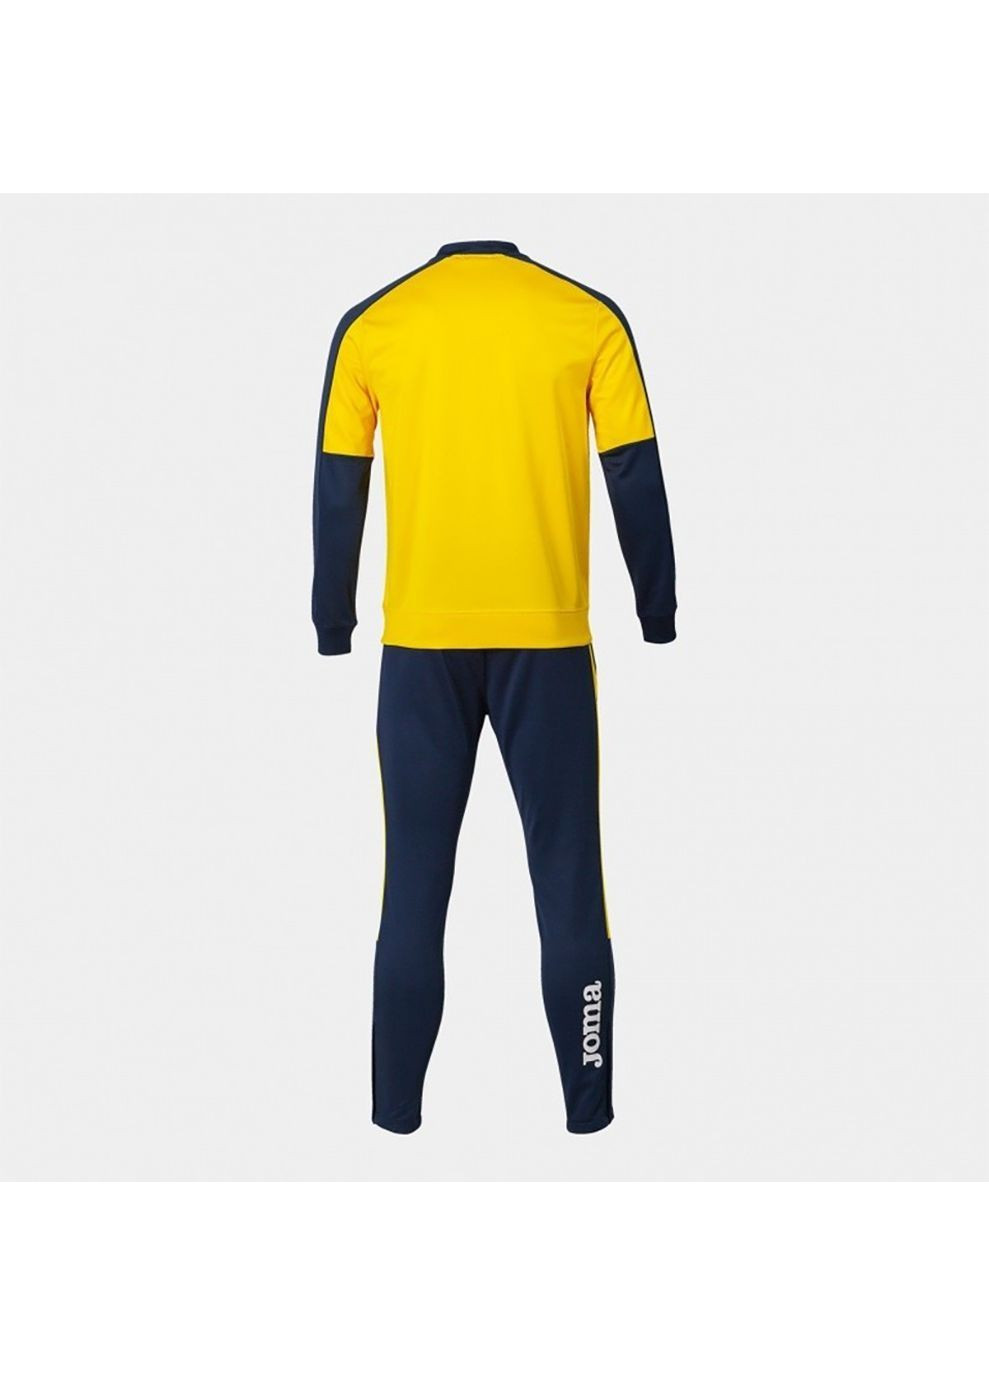 Спортивный костюм ECO CHAMPION желтый,синий Joma (282316524)